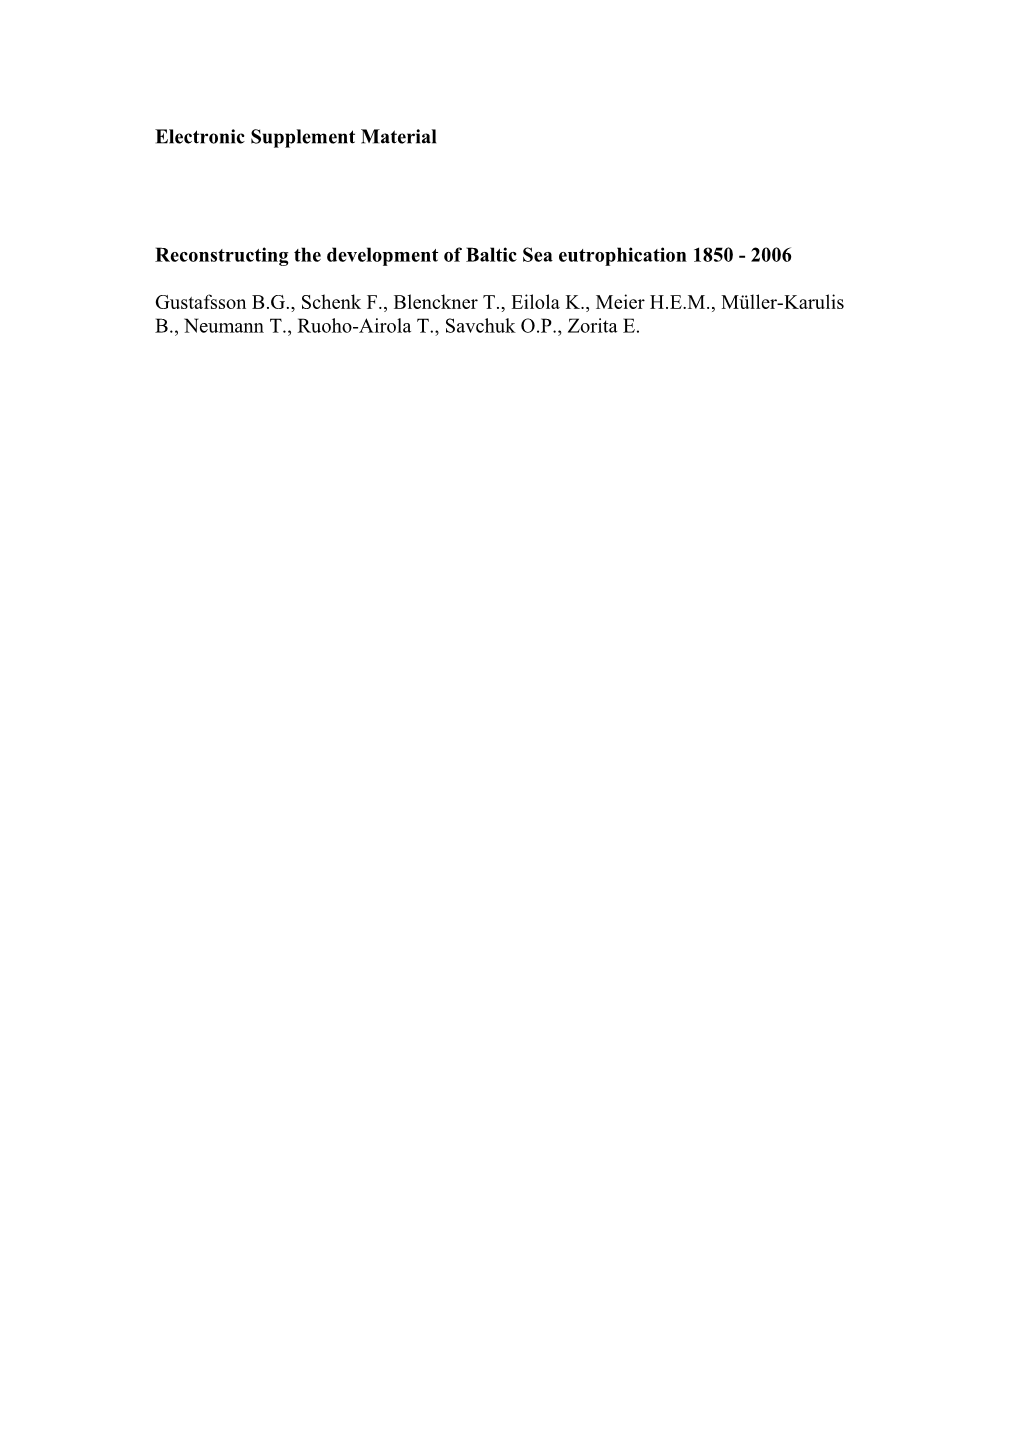 Reconstructing the Development of Baltic Sea Eutrophication 1850 - 2006